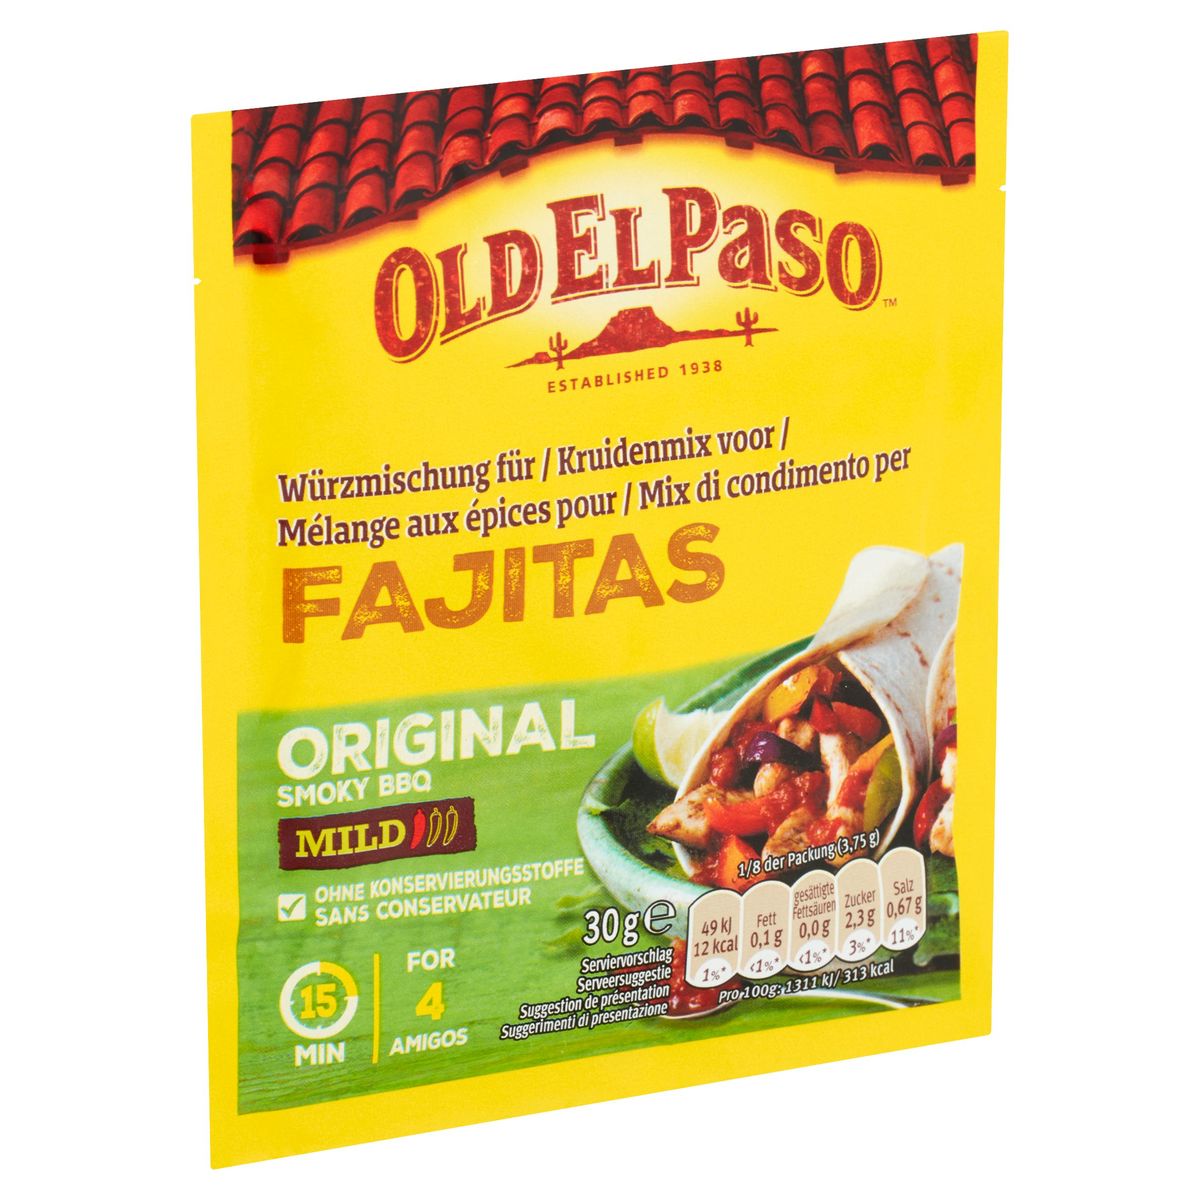 Old El Paso Kruidenmix voor Fajitas Original Smoky BBQ Mild 30 g